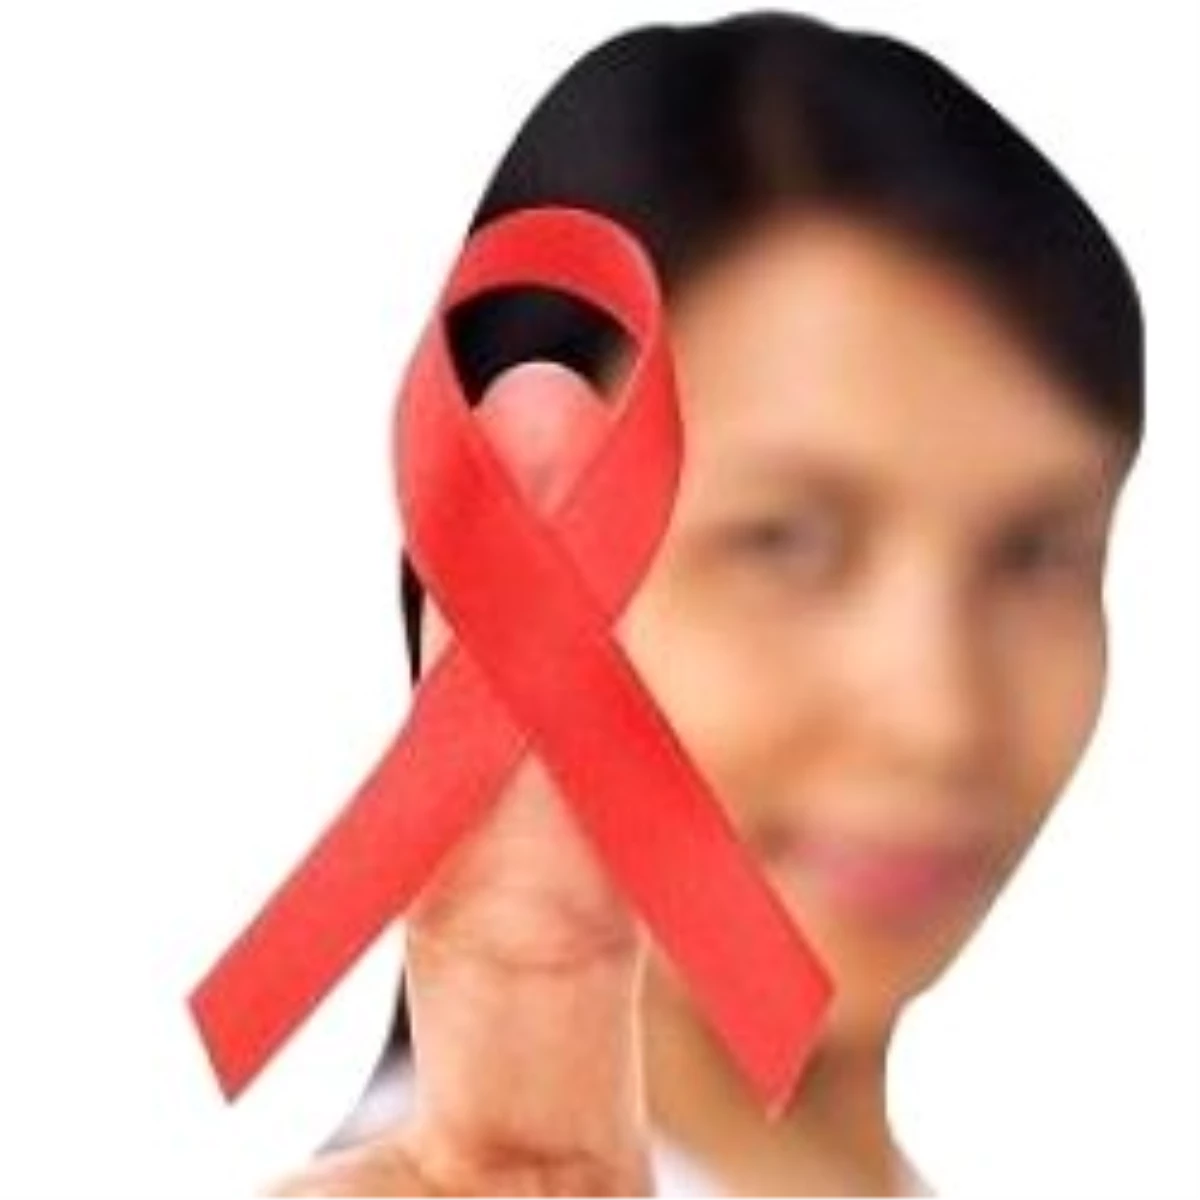 AIDS’e Karşı ‘Pozitif-Negatif Yaklaşımlar" Fotoğraf Sergisi